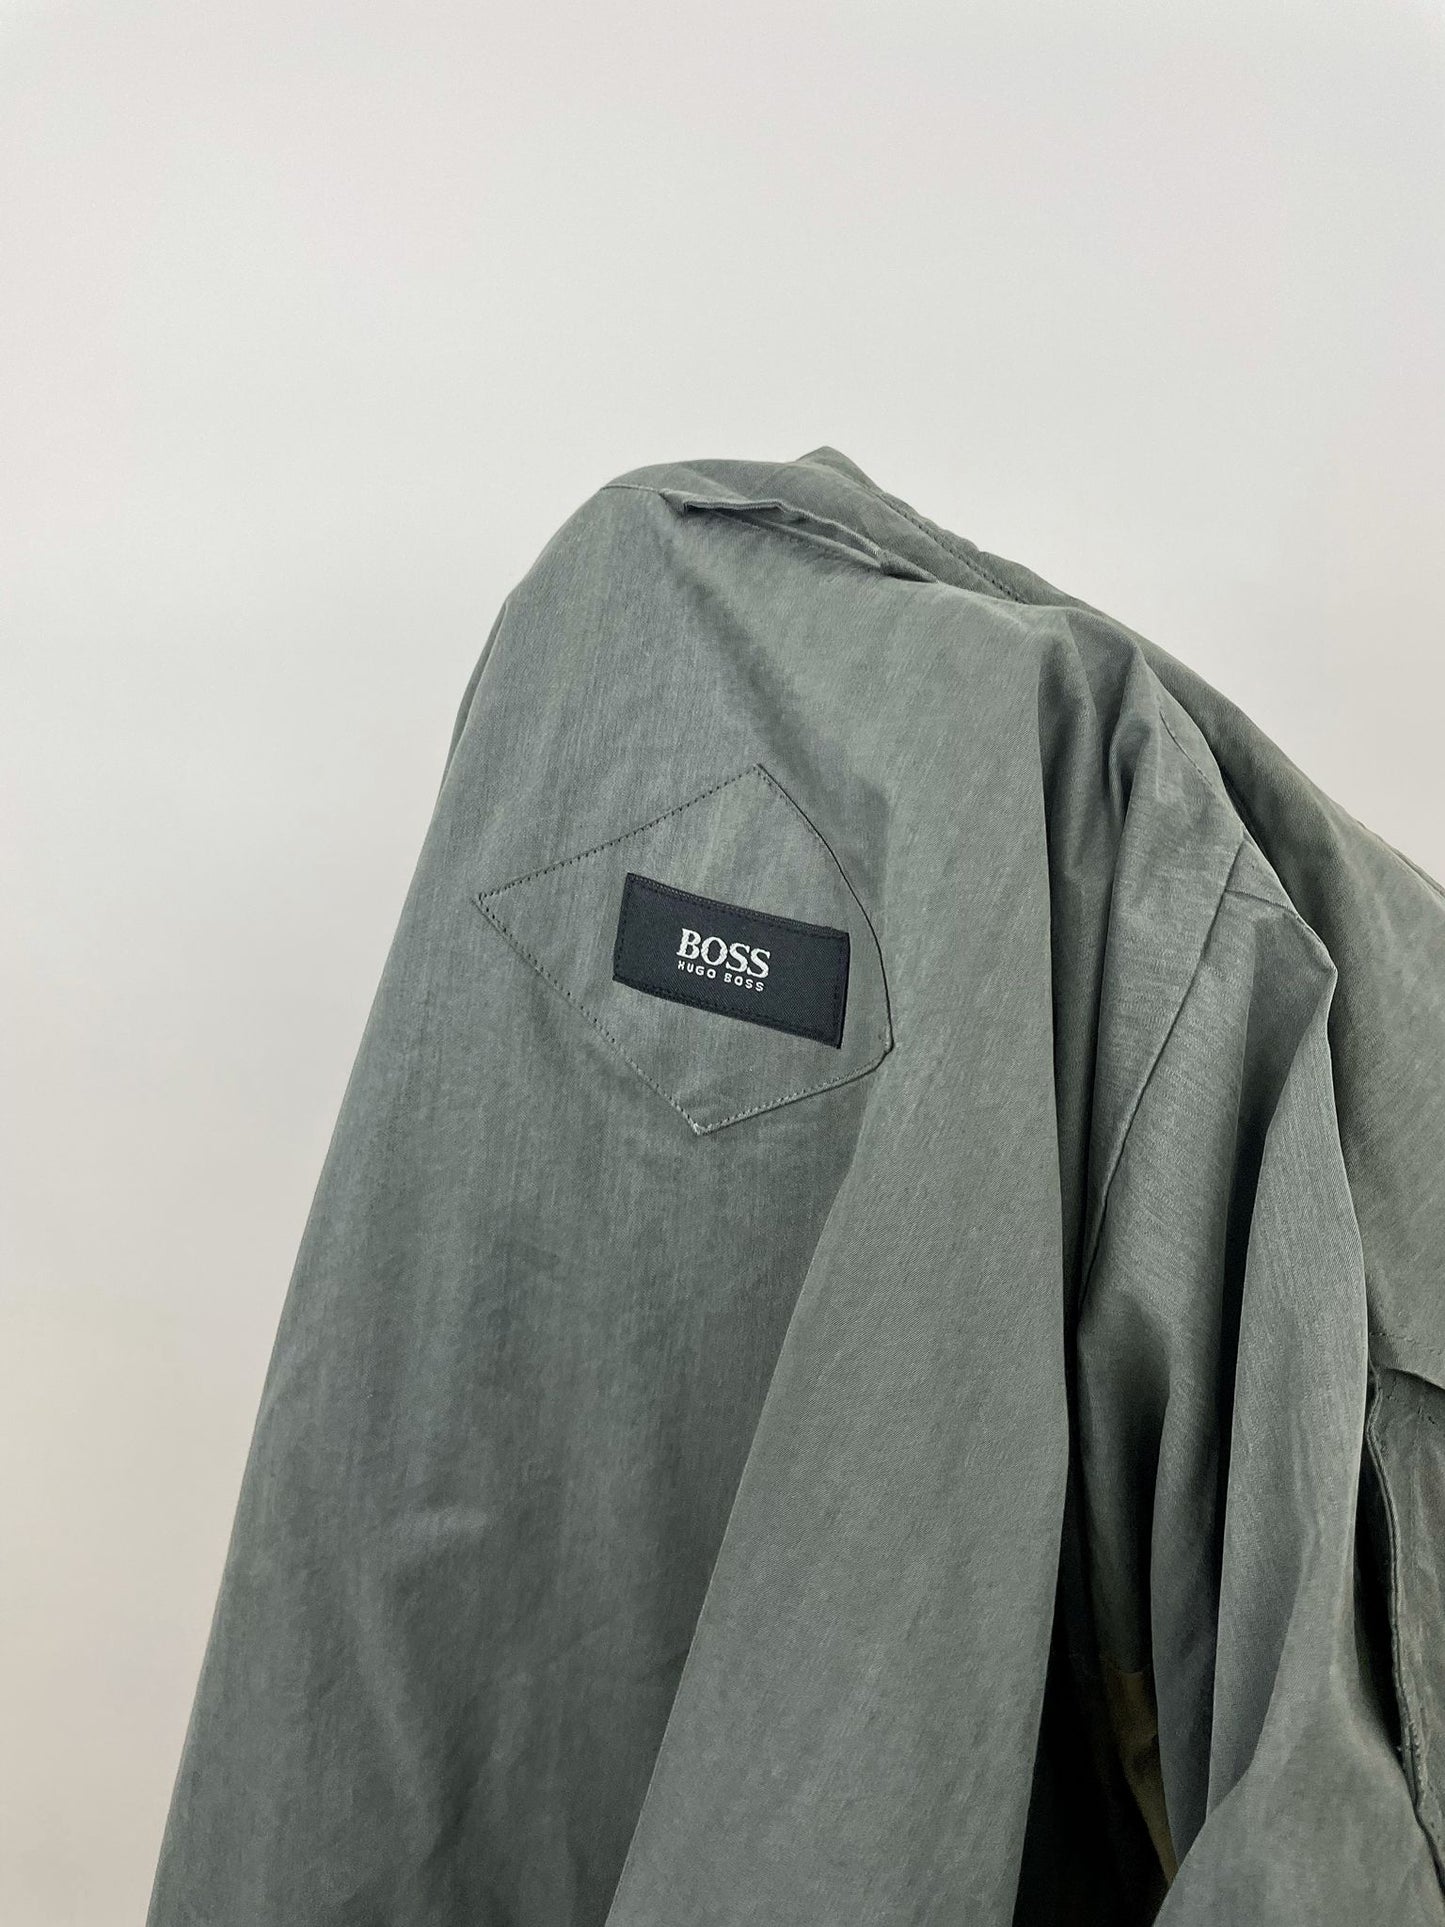 Hugo Boss trench coat